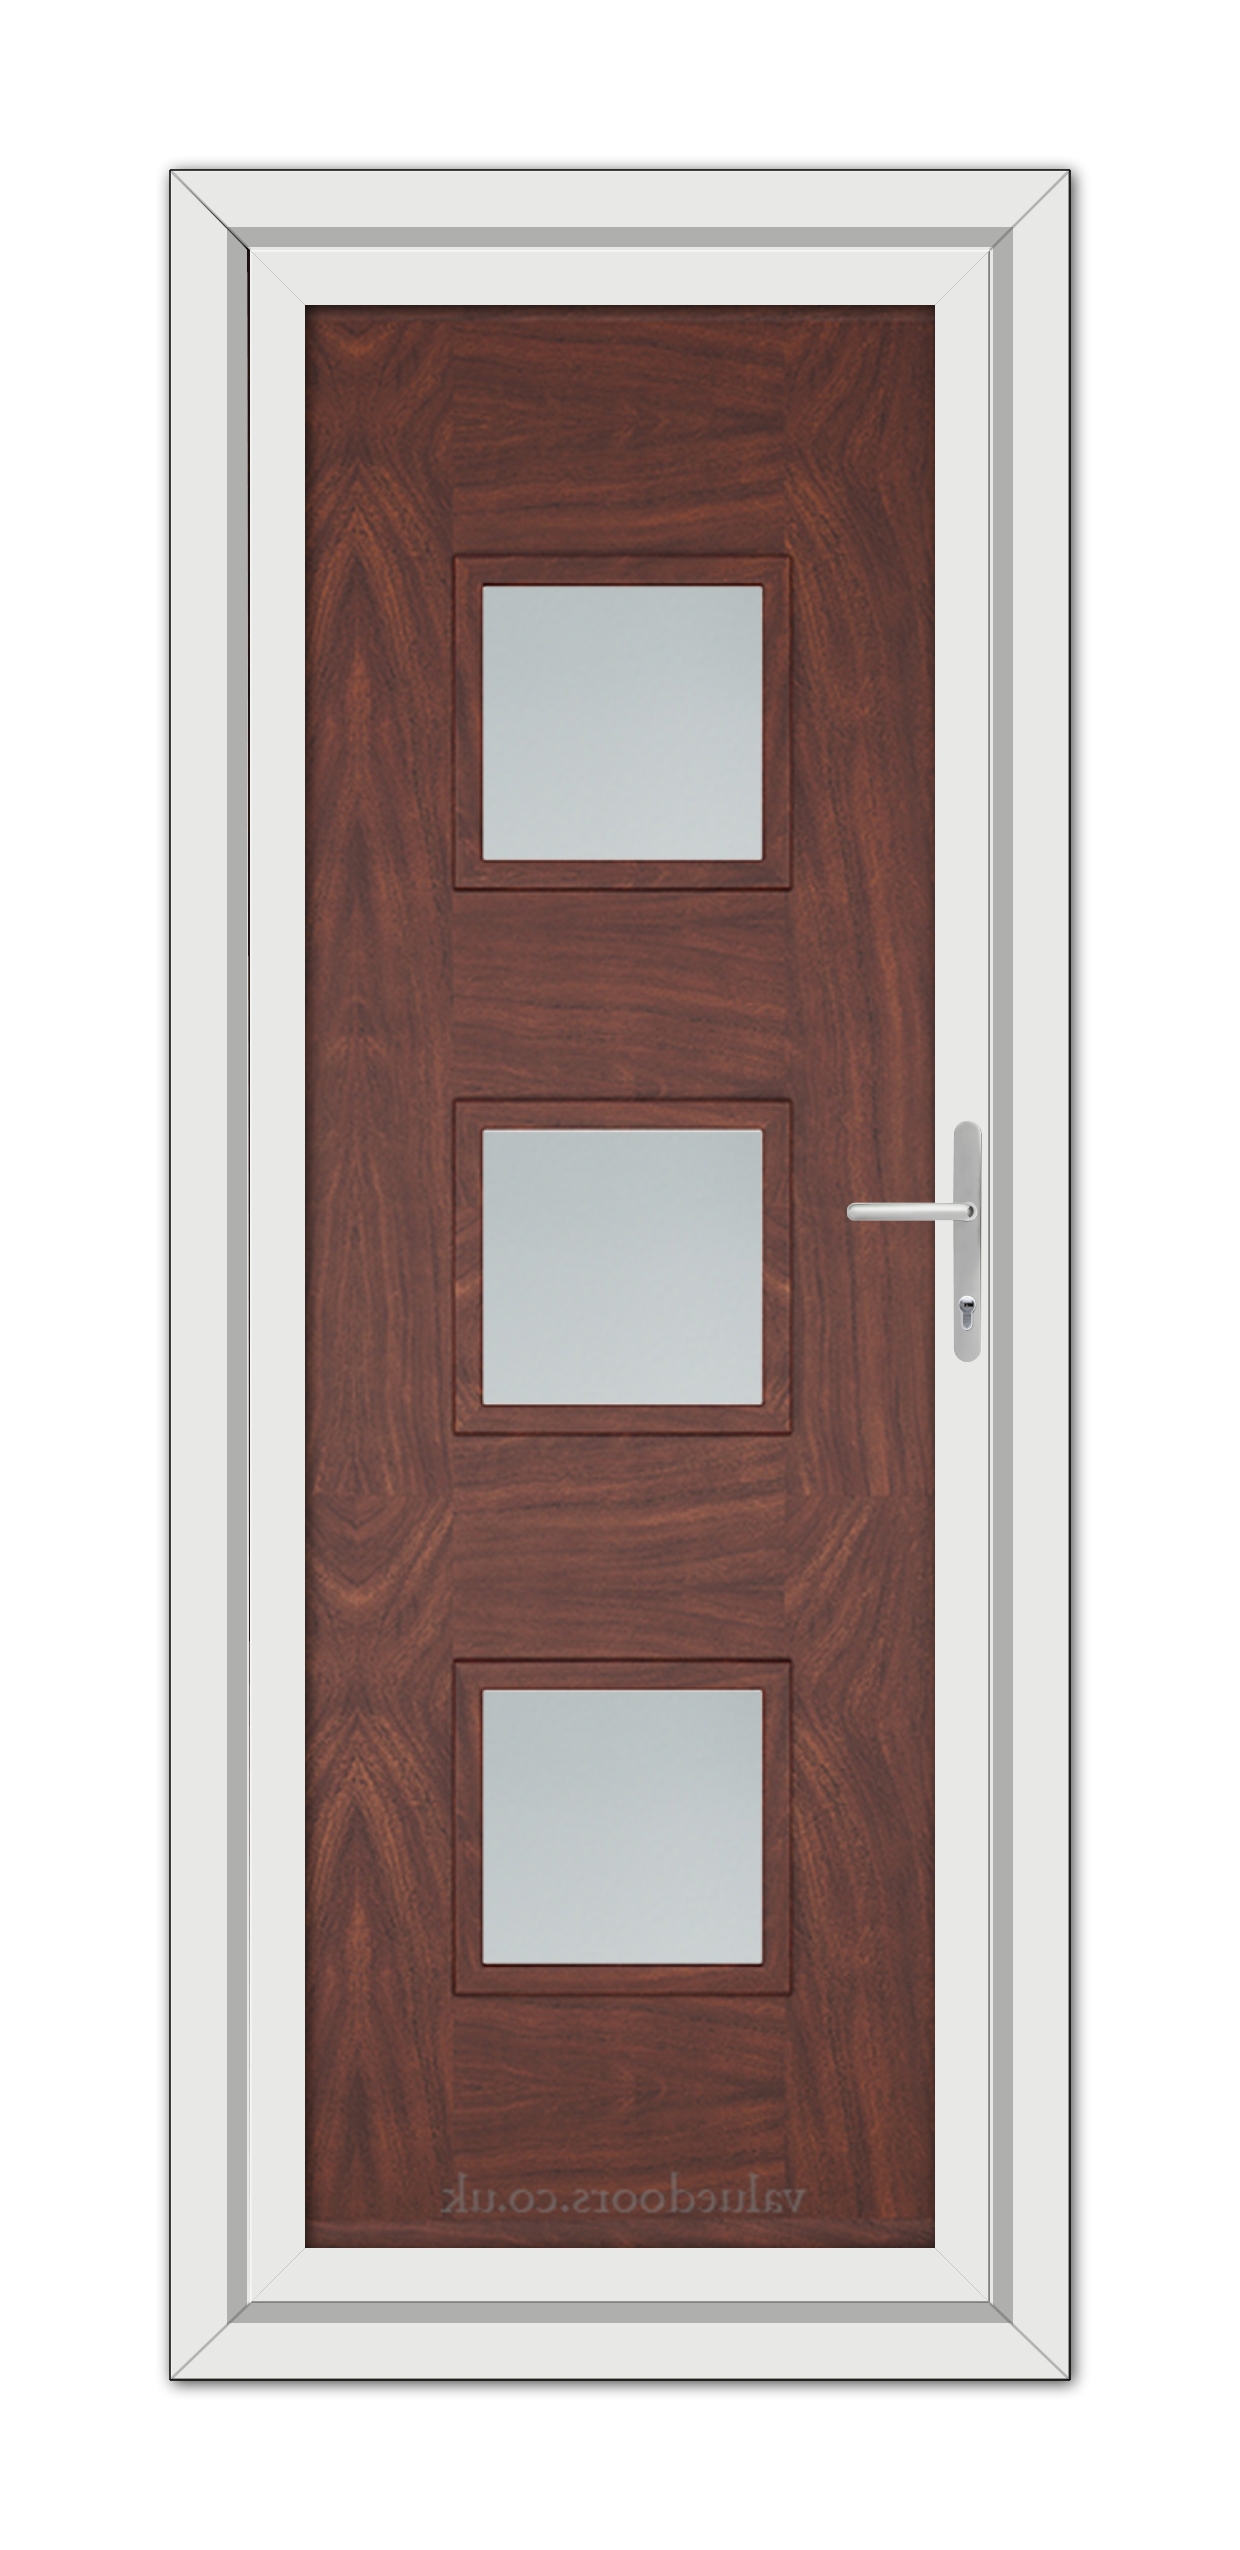 A close-up of a Rosewood Modern 5013 uPVC Door.